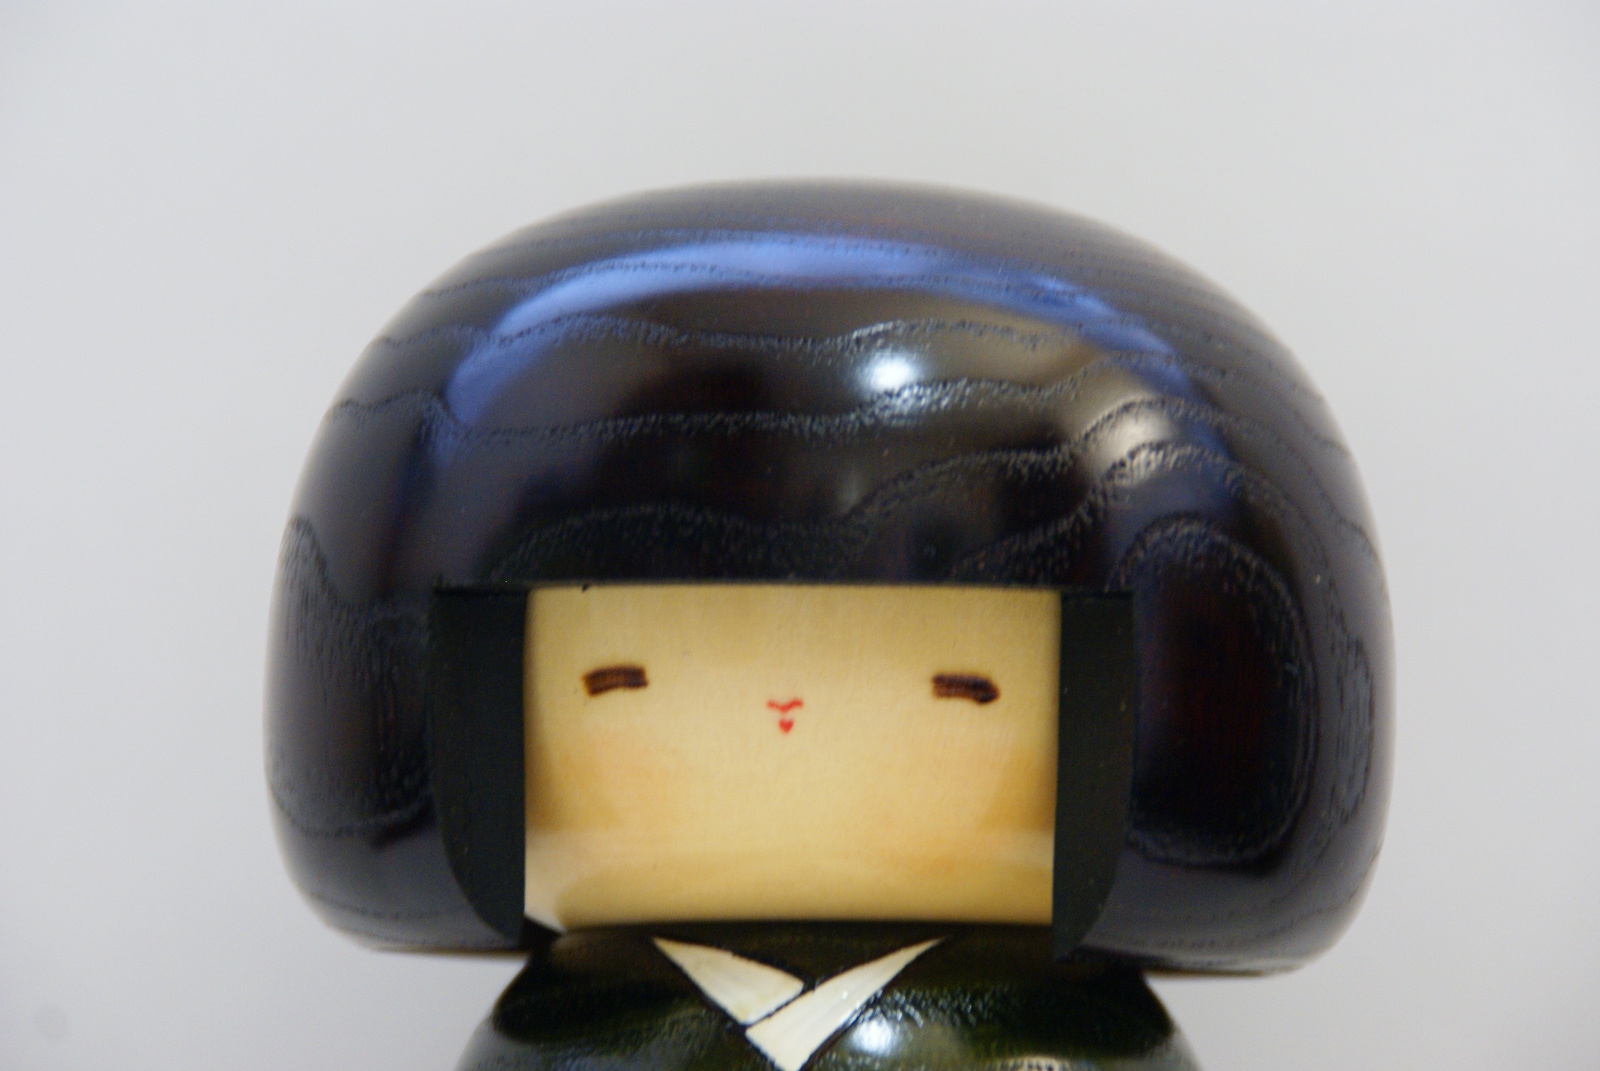 Lovely Creative Kokeshi Doll KAMBAI (EARLY PLUM BLOSSOM), Green by Usaburo - MMH Collectibles Japan